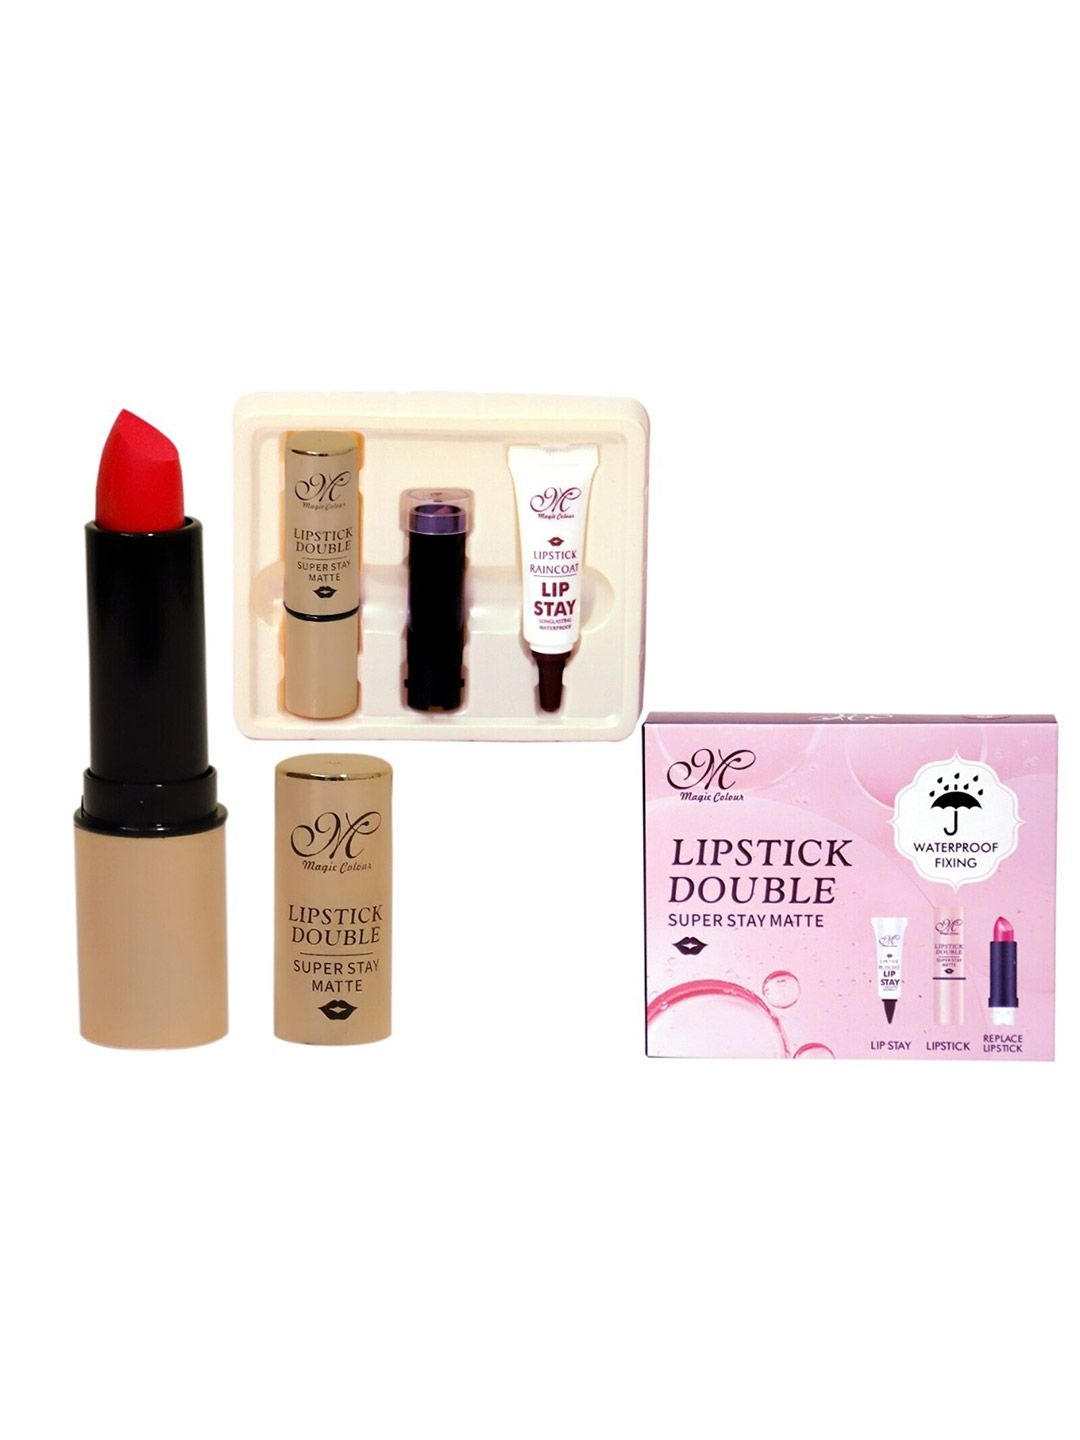 Magic Colour Transfer Proof Lipstick Double Kit 2 Lipsticks + 1 Lip Stay Gel, Rose Petal 15.6gm Price in India